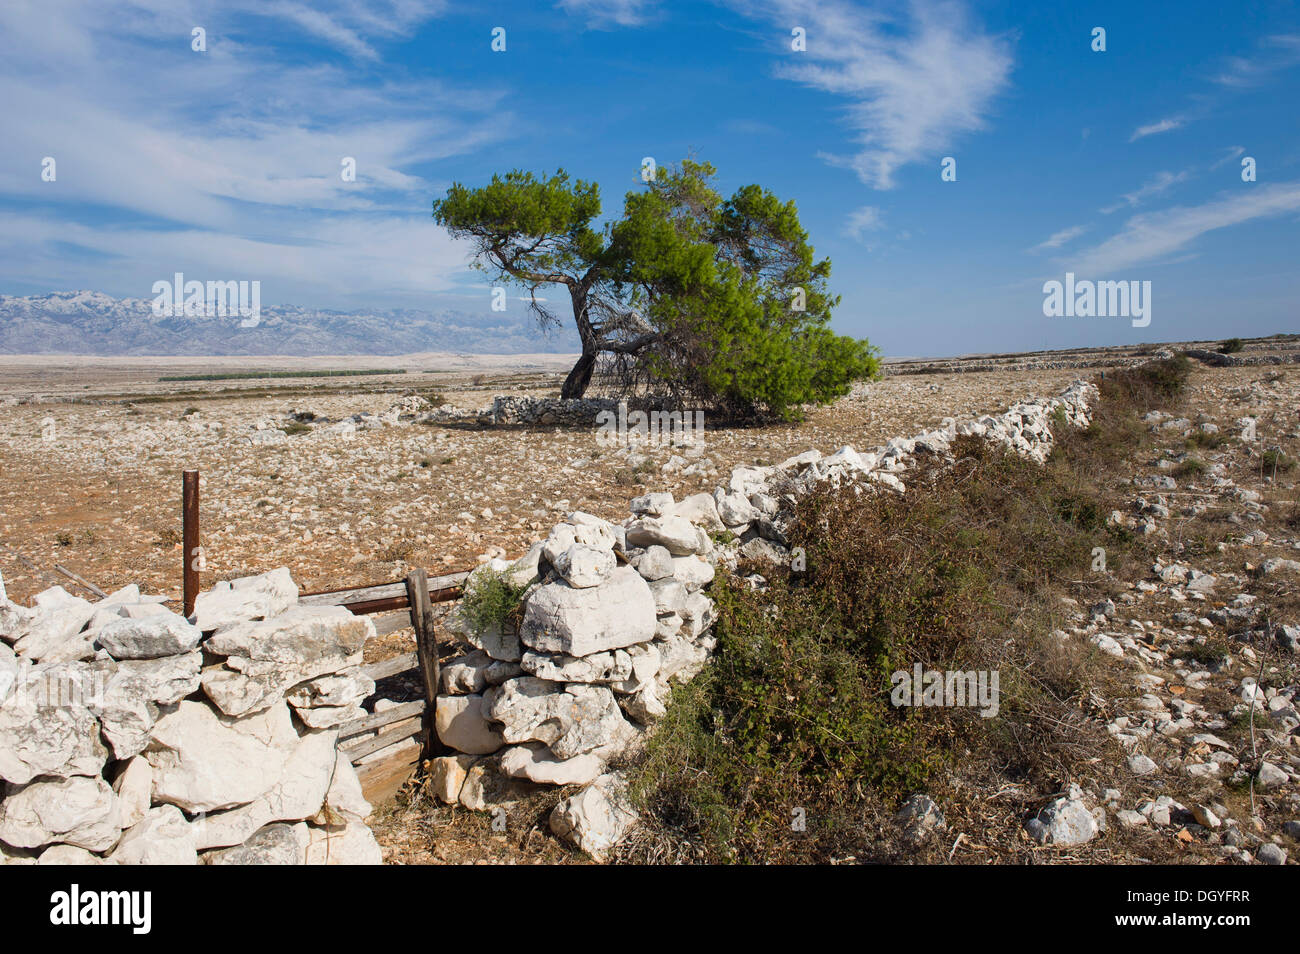 Karst landscape with a natural stone wall and a tree near Povljana, Pag Island, Adriatic Sea, Gulf of Kvarner, Croatia, Europe Stock Photo